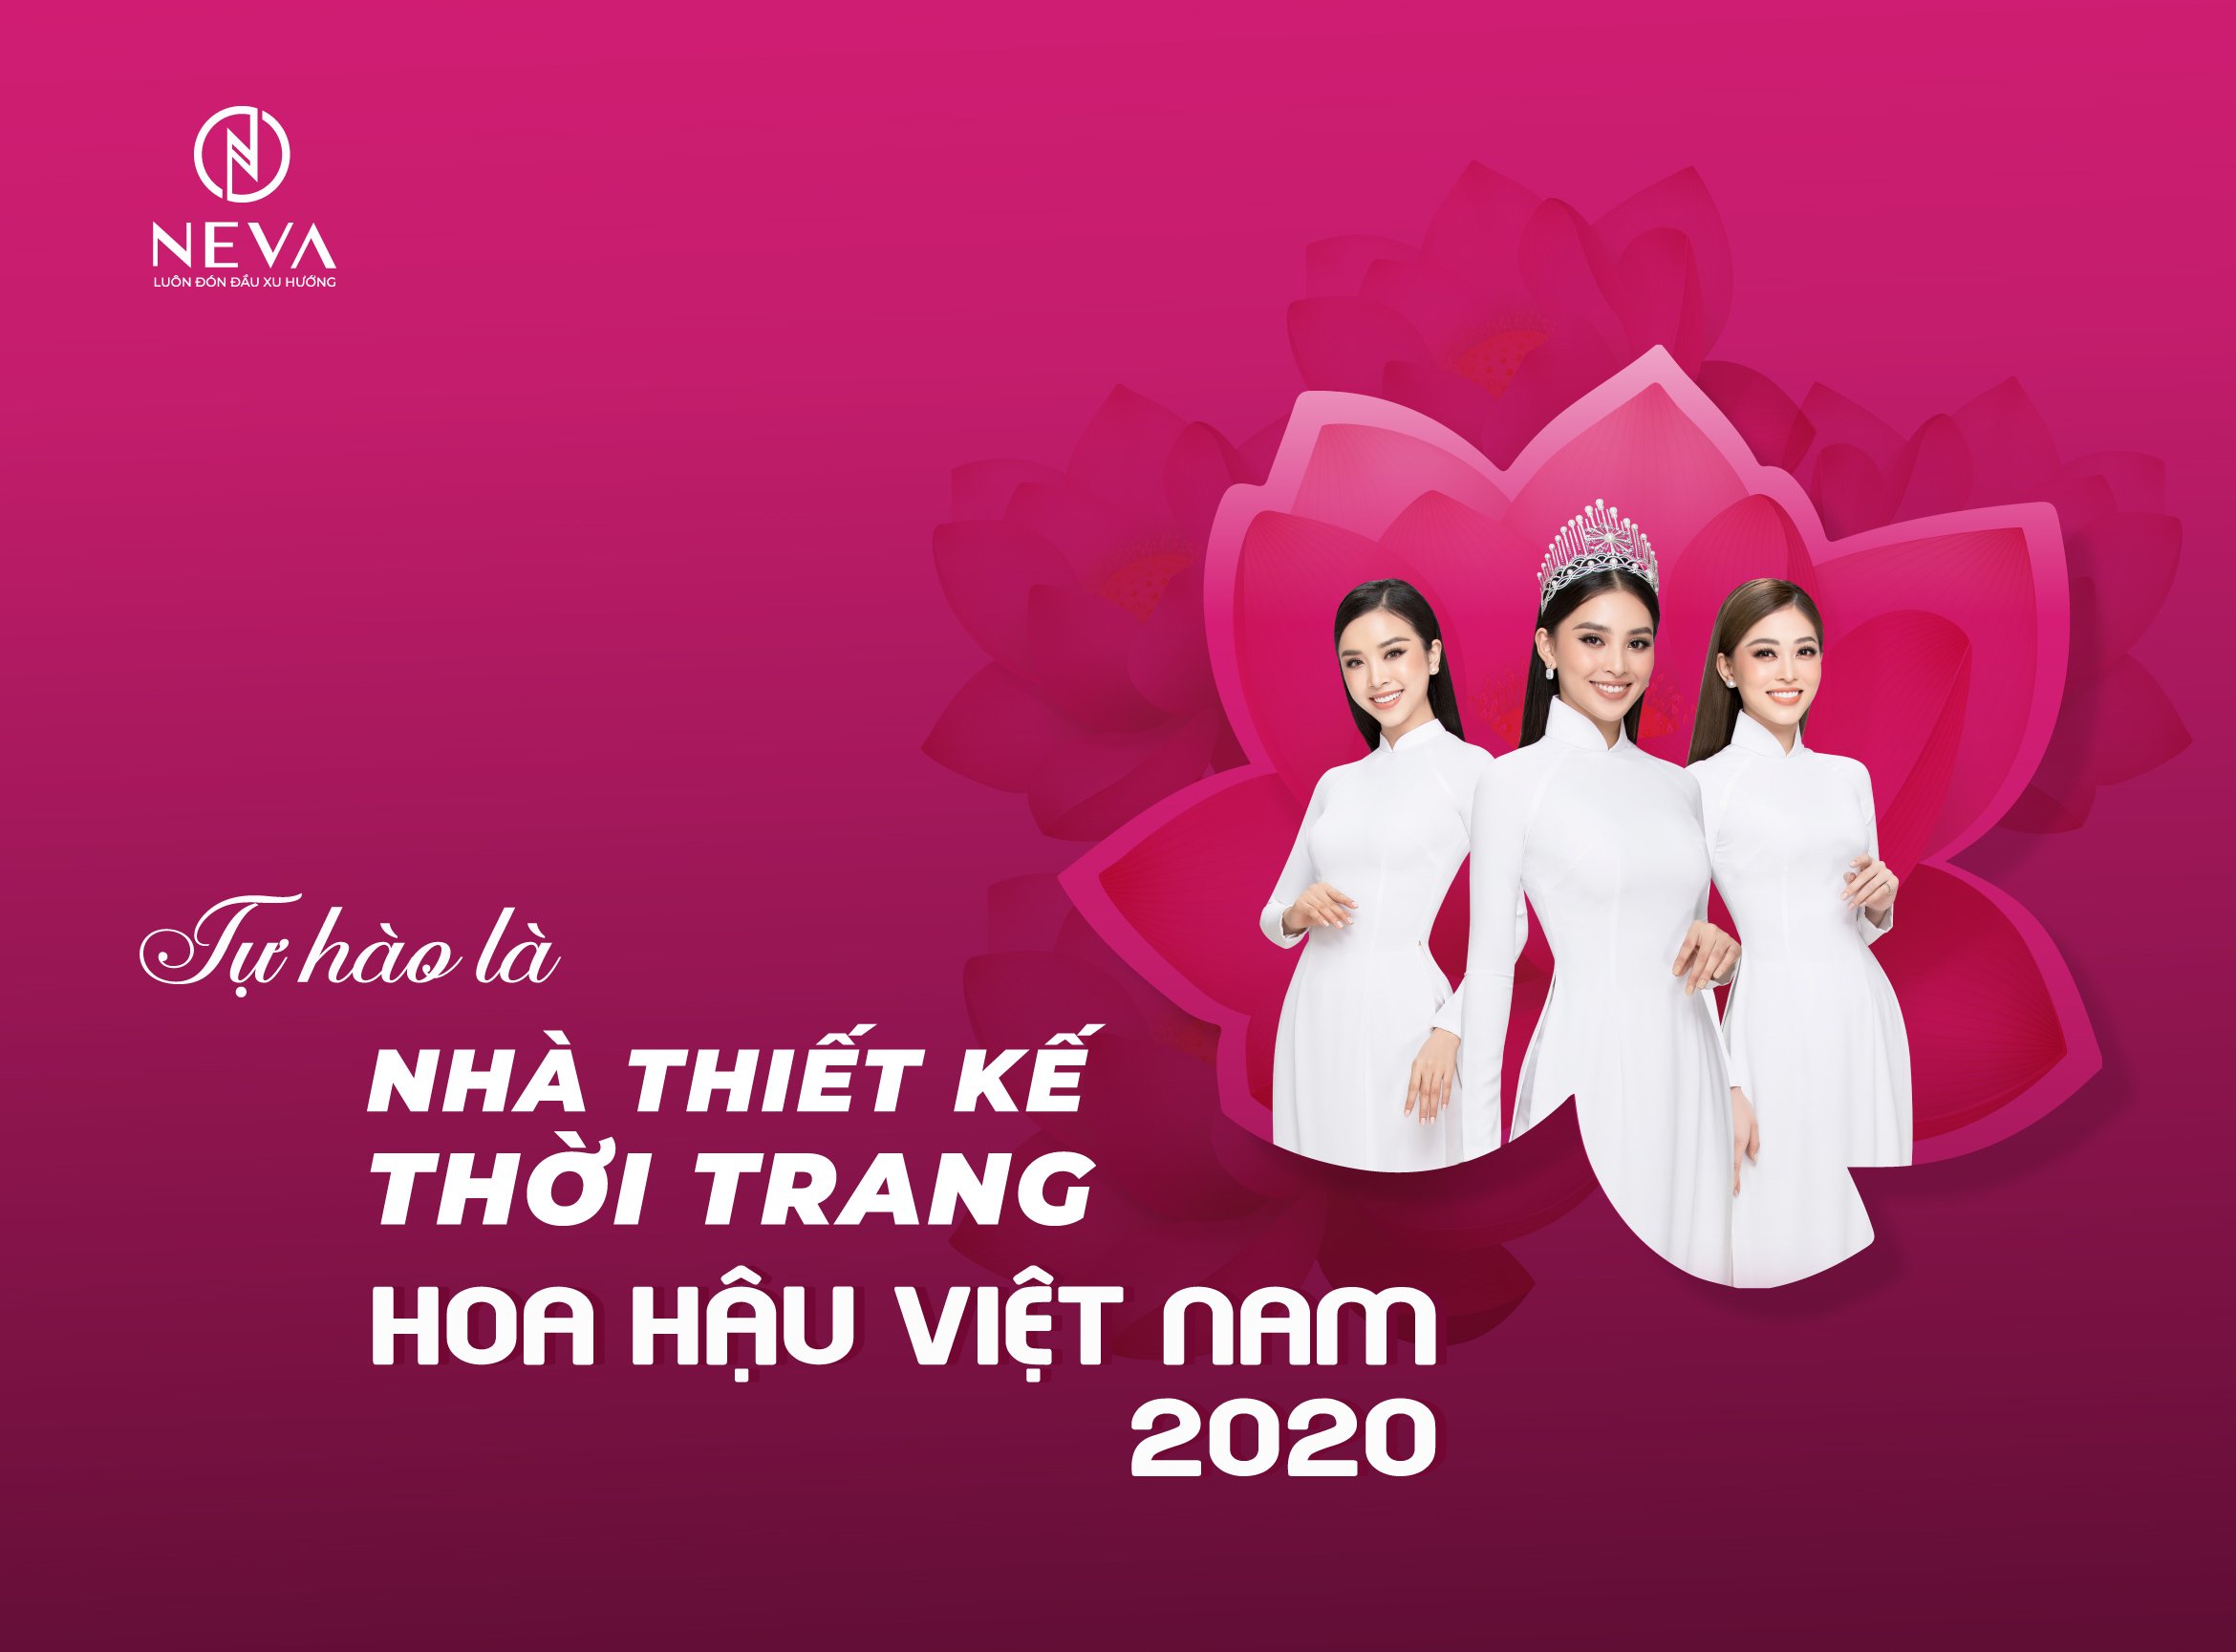 “NEVA Fashion show” tại sân khấu Hoa hậu Việt Nam 2020